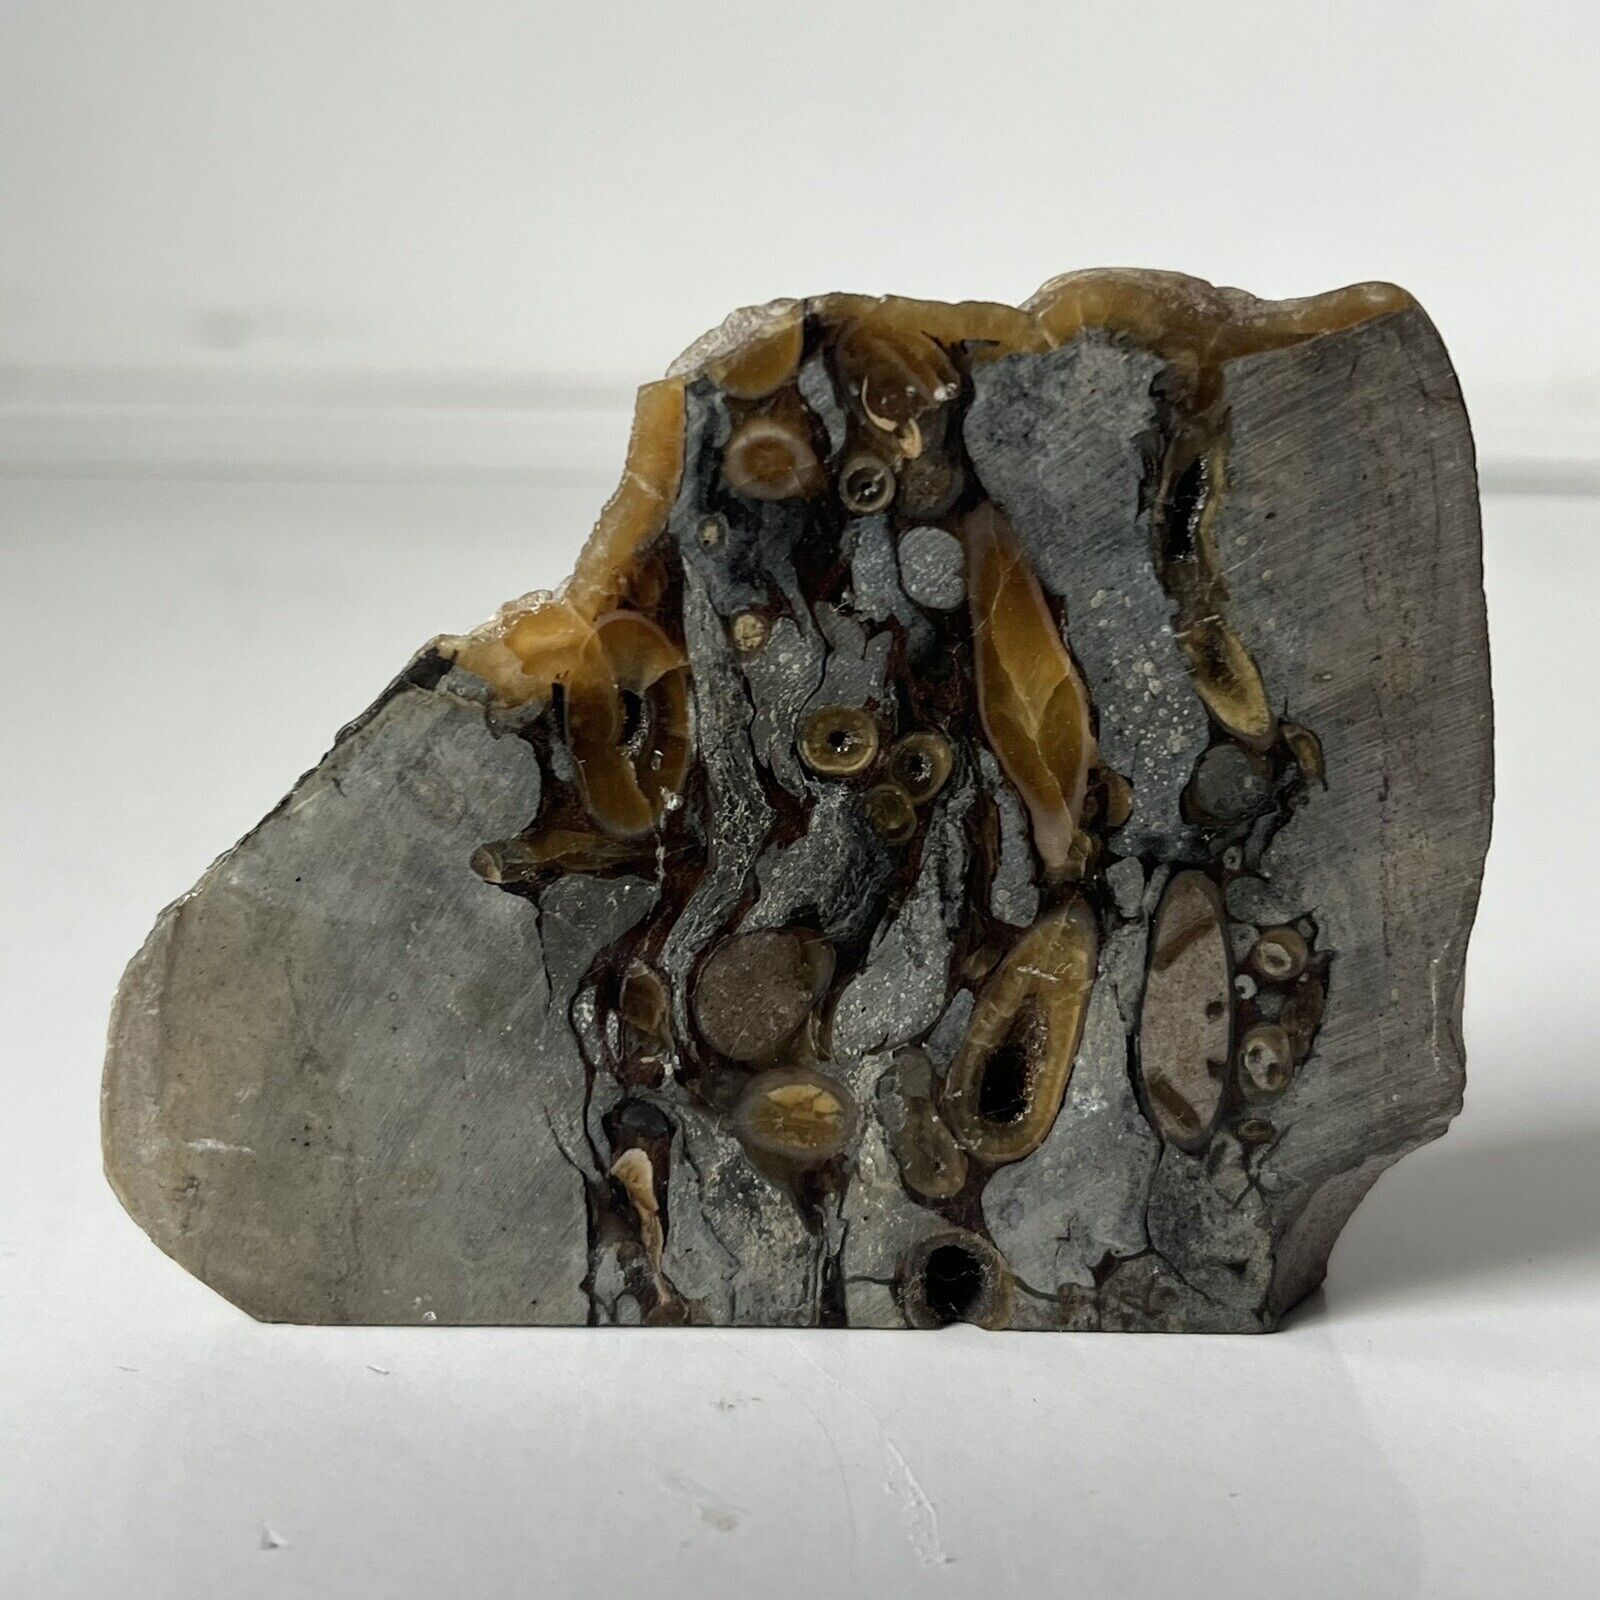 Polished Fossil Teredo Petrified Wood Slab (Shipworm Bored) 135g. 80 x 60 x 35mm